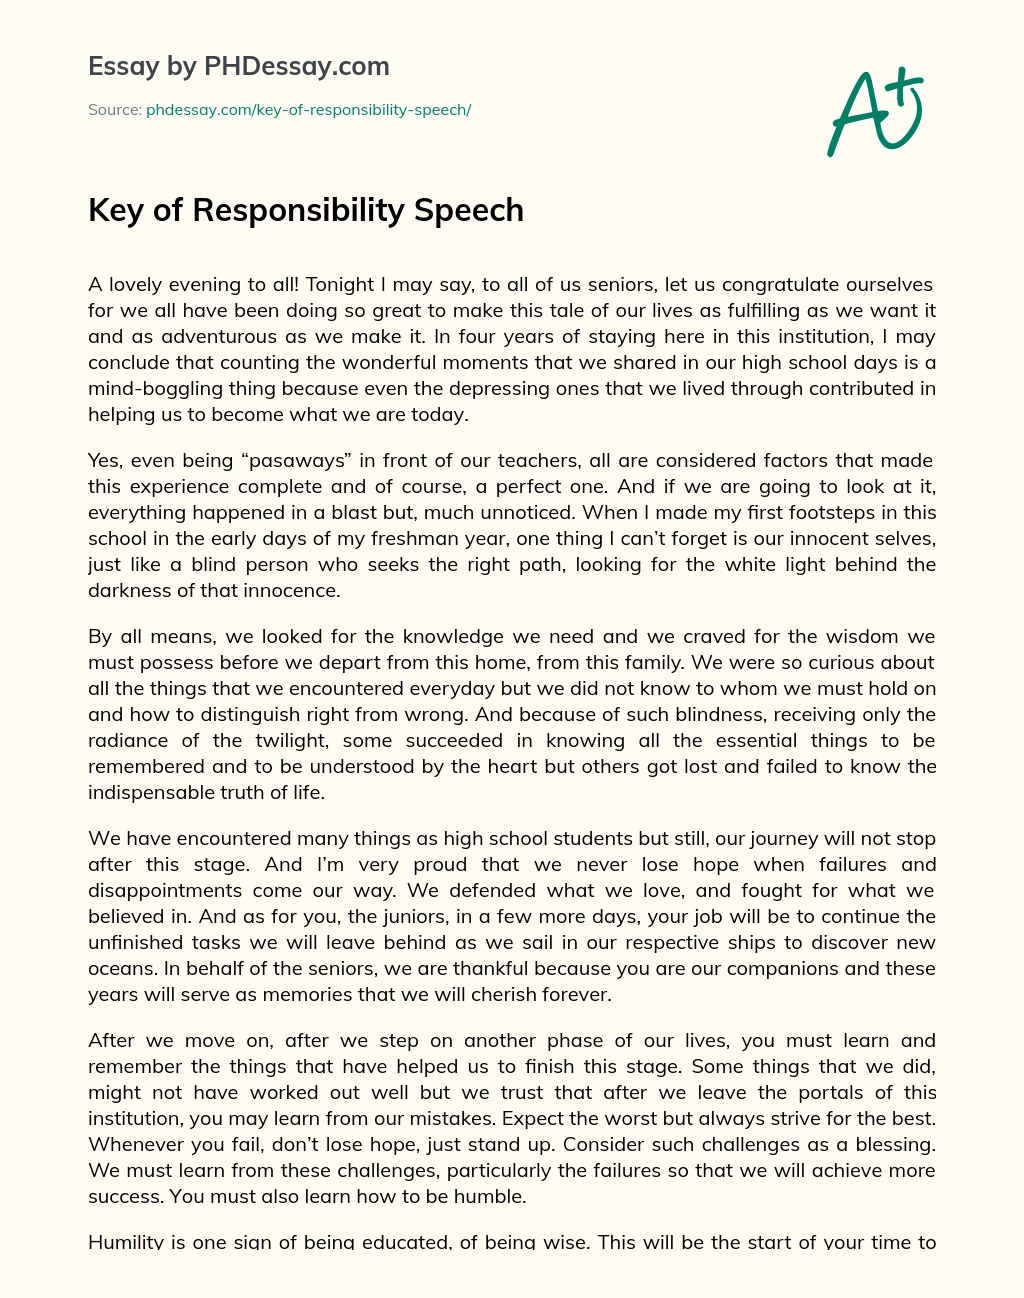 Key of Responsibility Speech essay